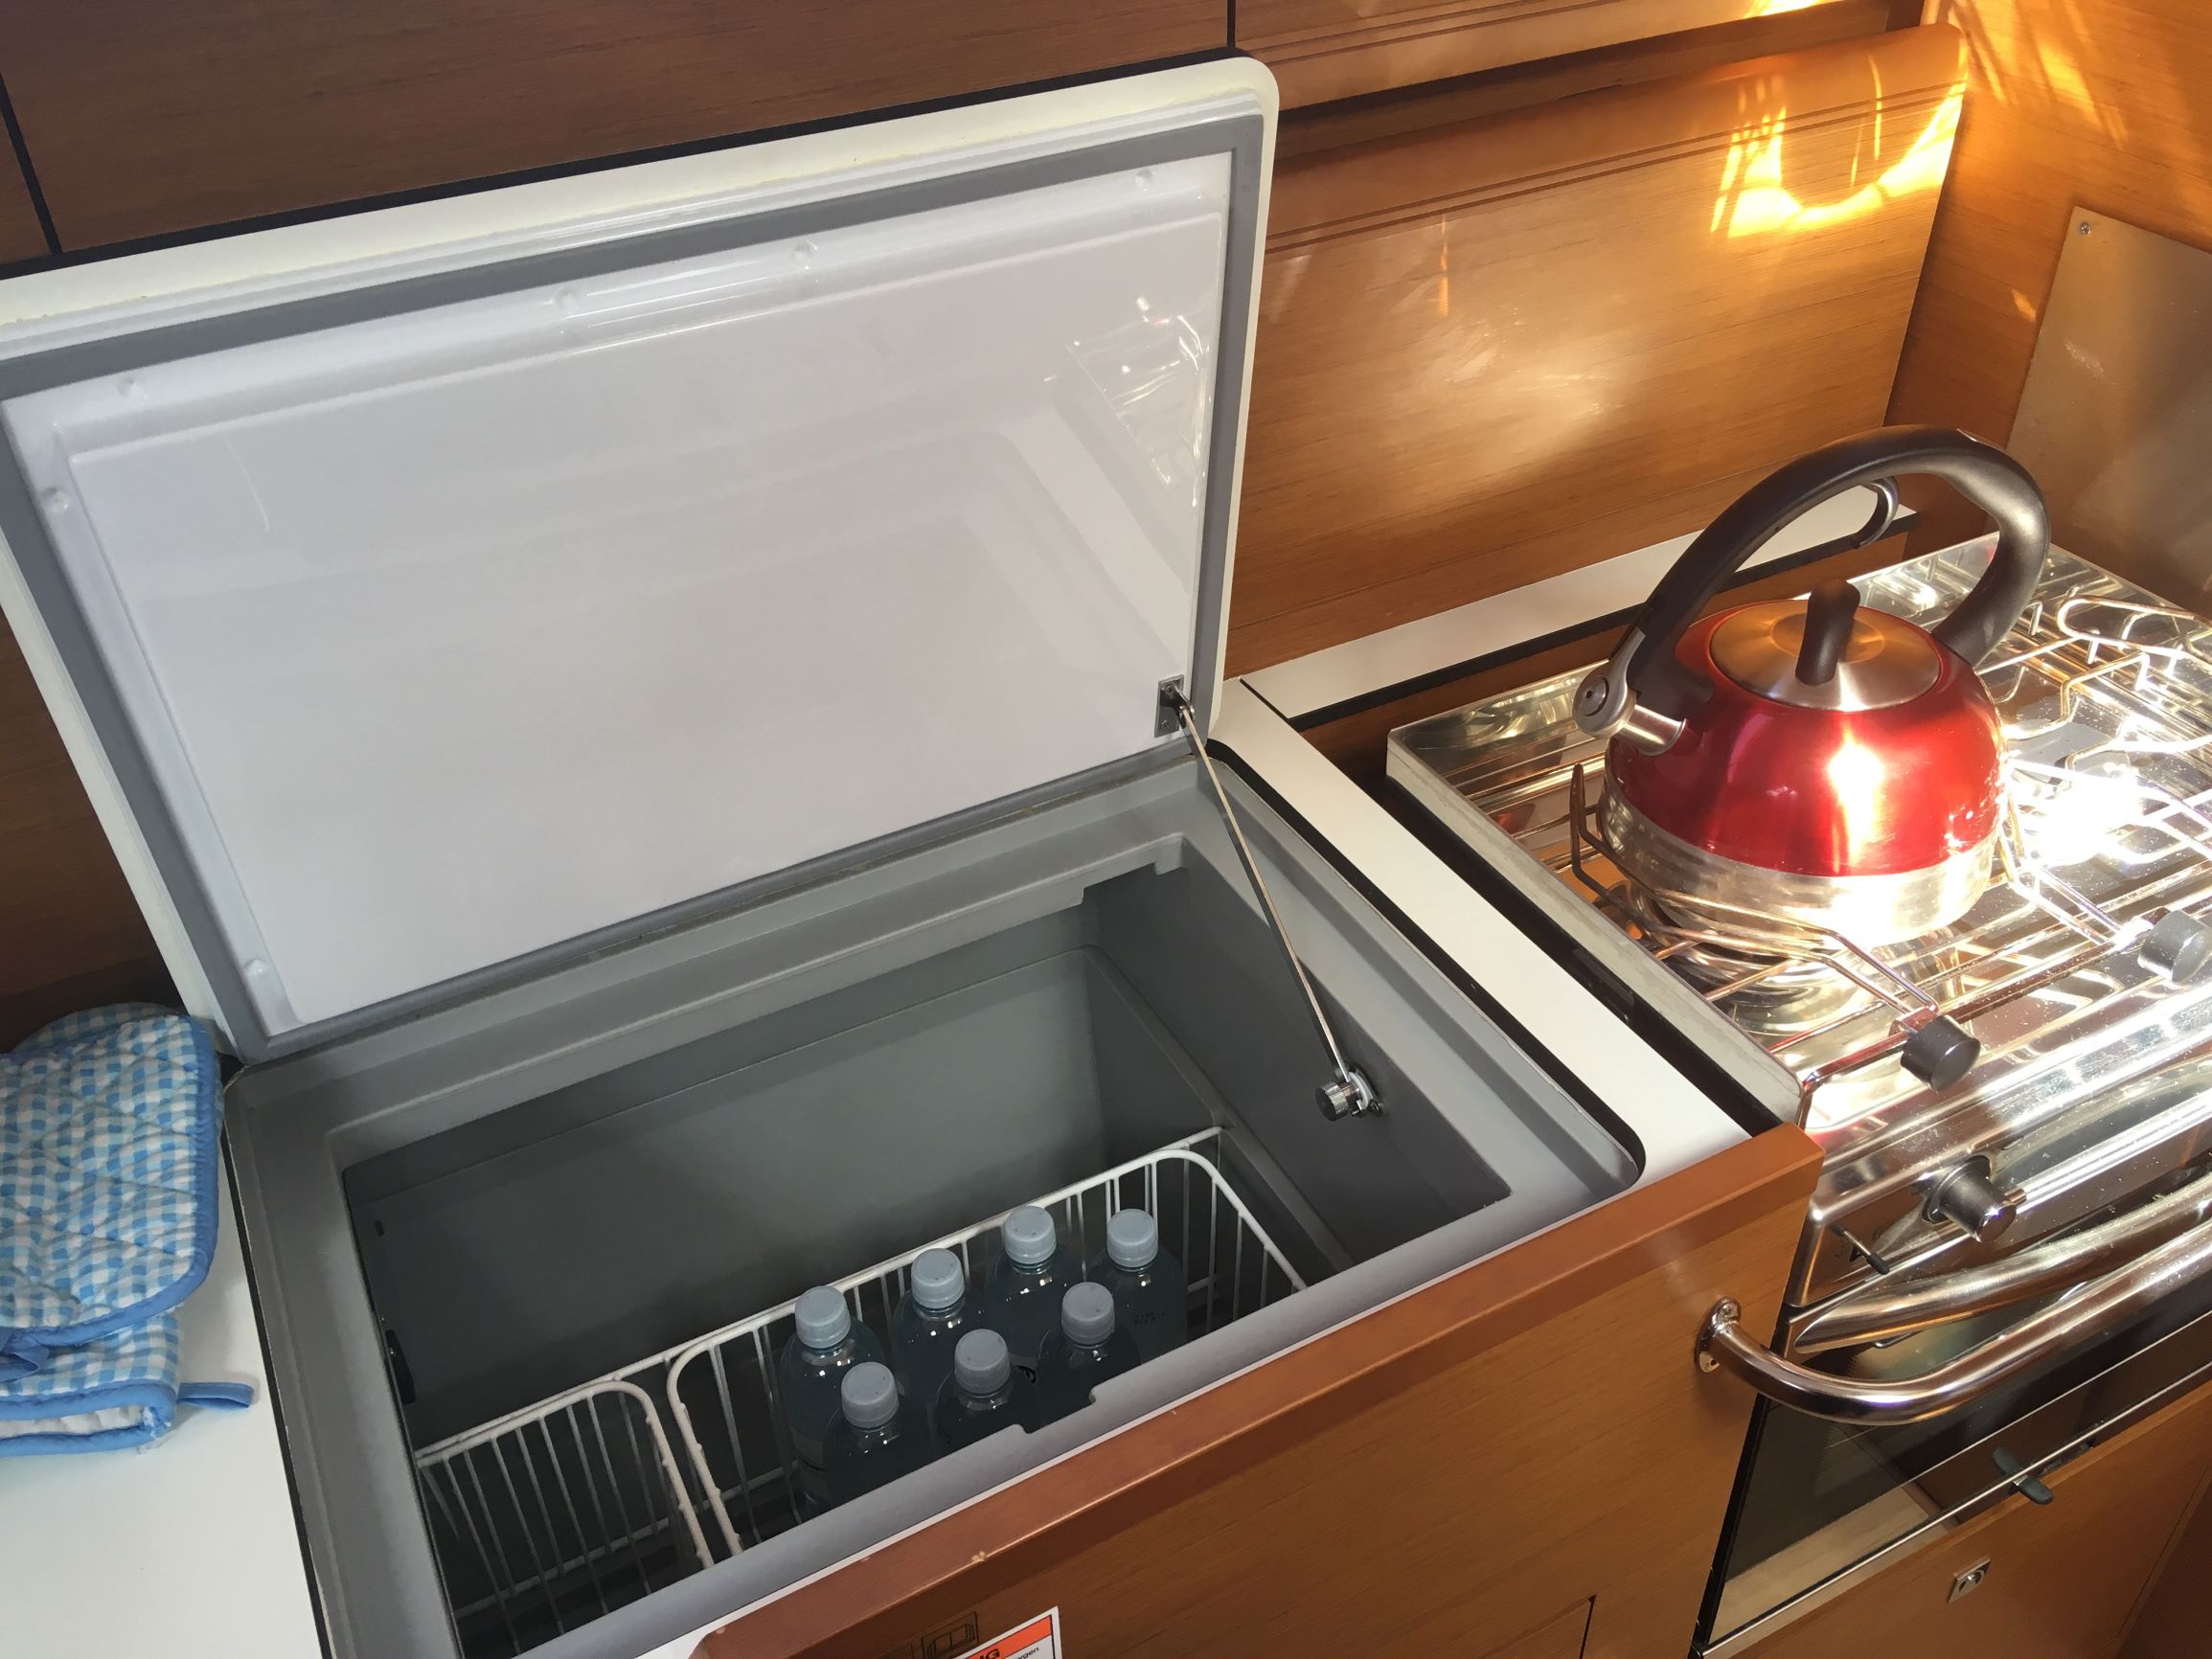 Jeanneau 419 - Zephyrus-Galley - stove & Large fridge storage - Zephyrus (Resized).jpg